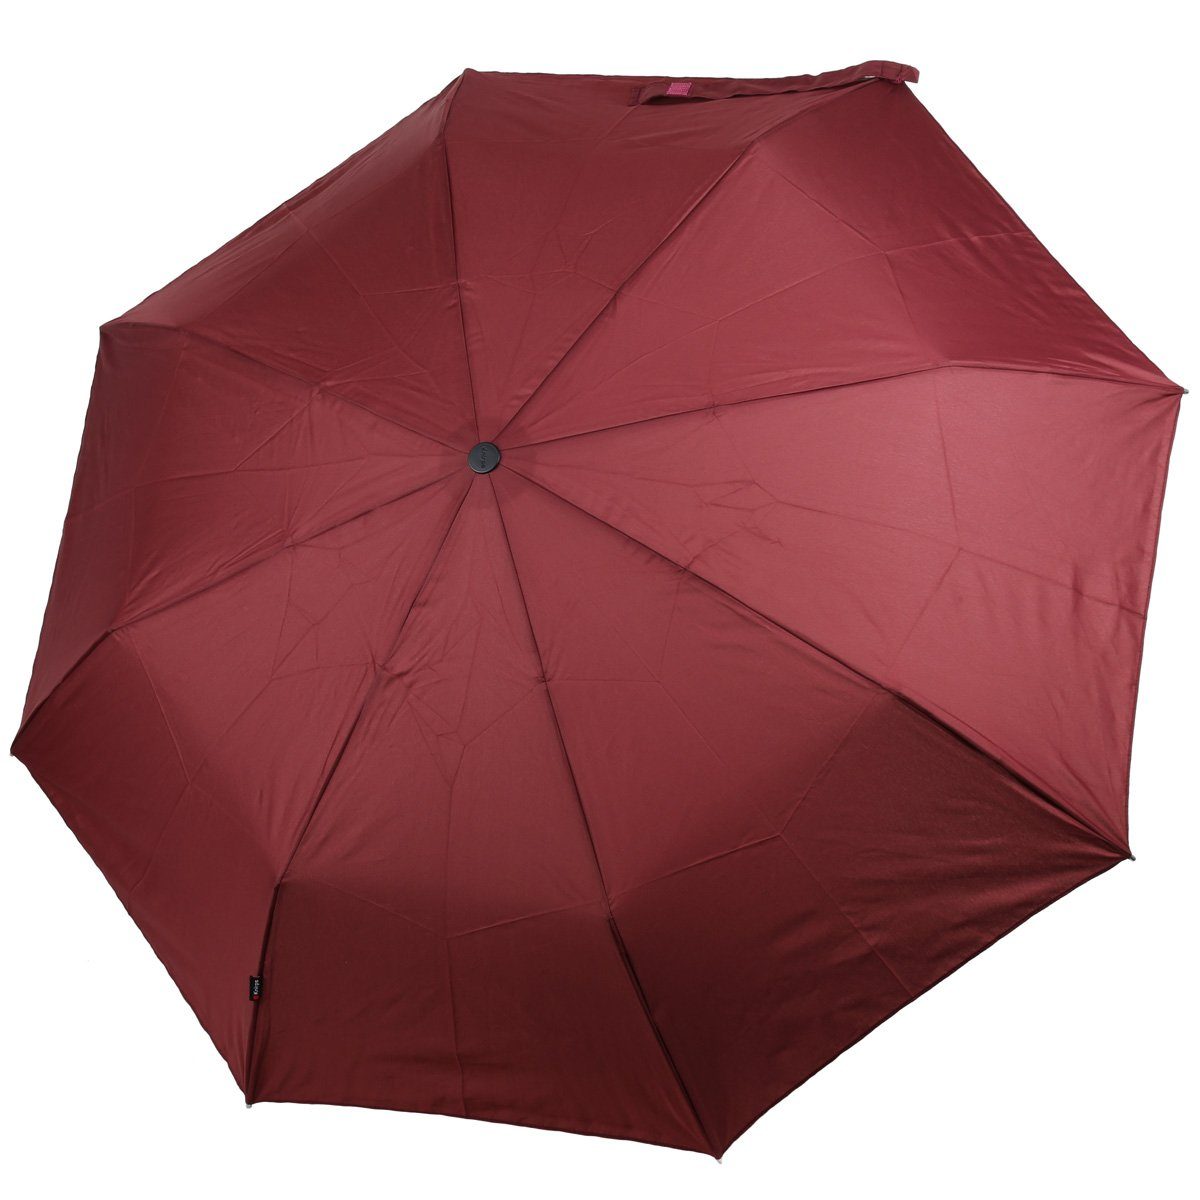 T21 Bordeaux Automatikschirm 8780 Fiber Knirps® Duomatic 89 Regenschirm Umbrella Taschenregenschirm